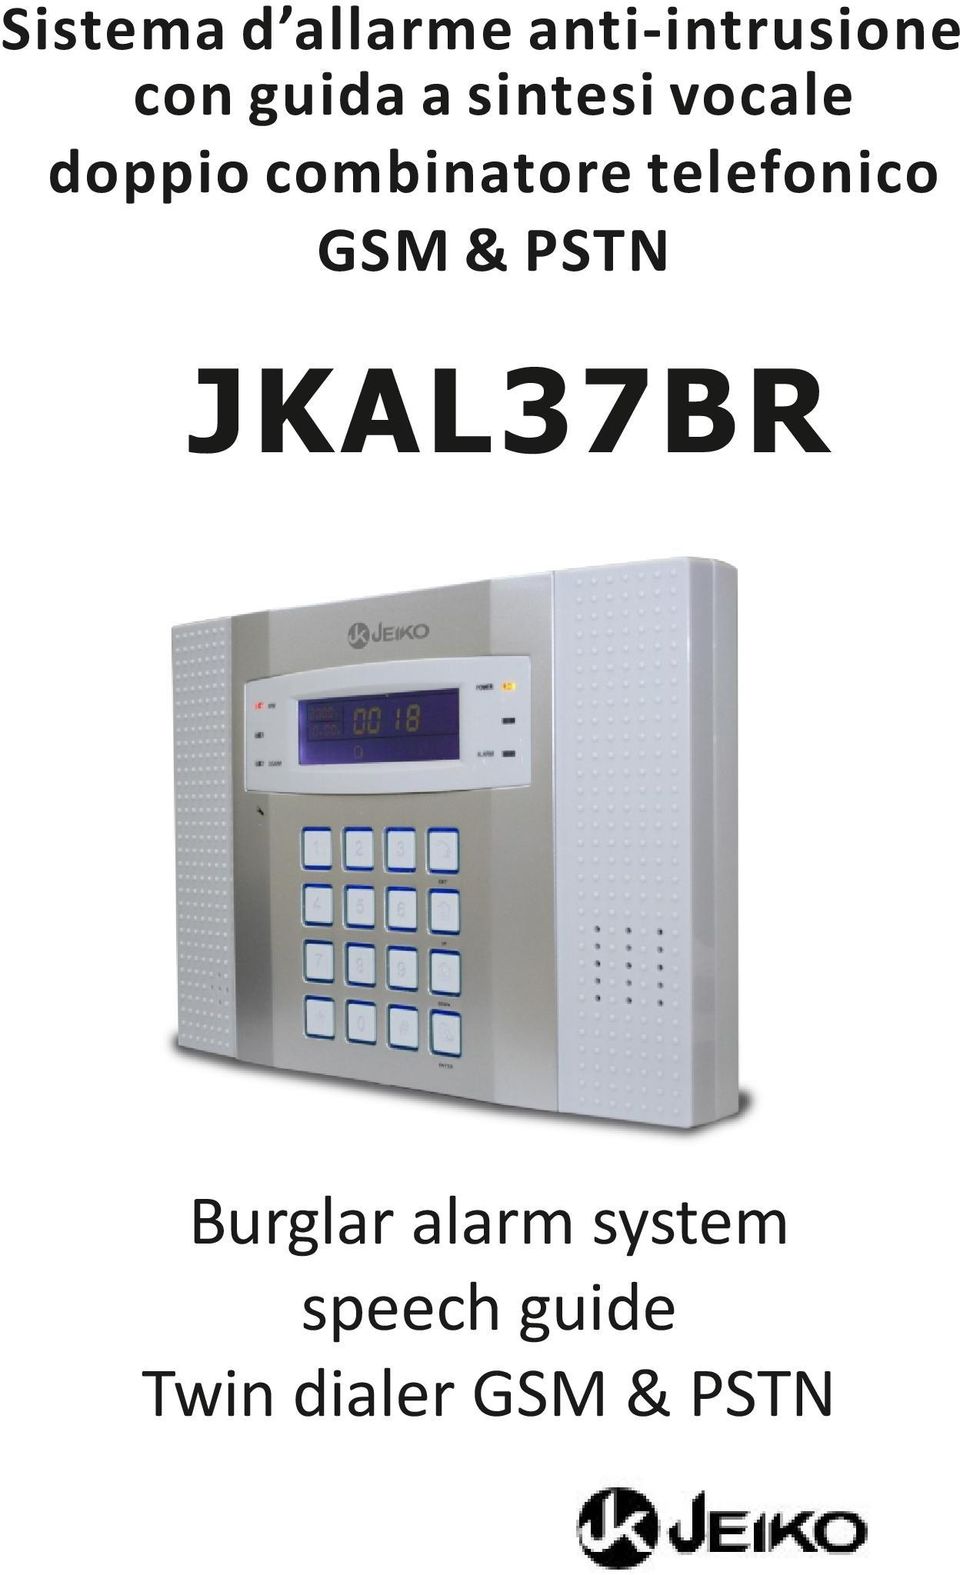 telefonico GSM & PSTN JKAL37BR Burglar